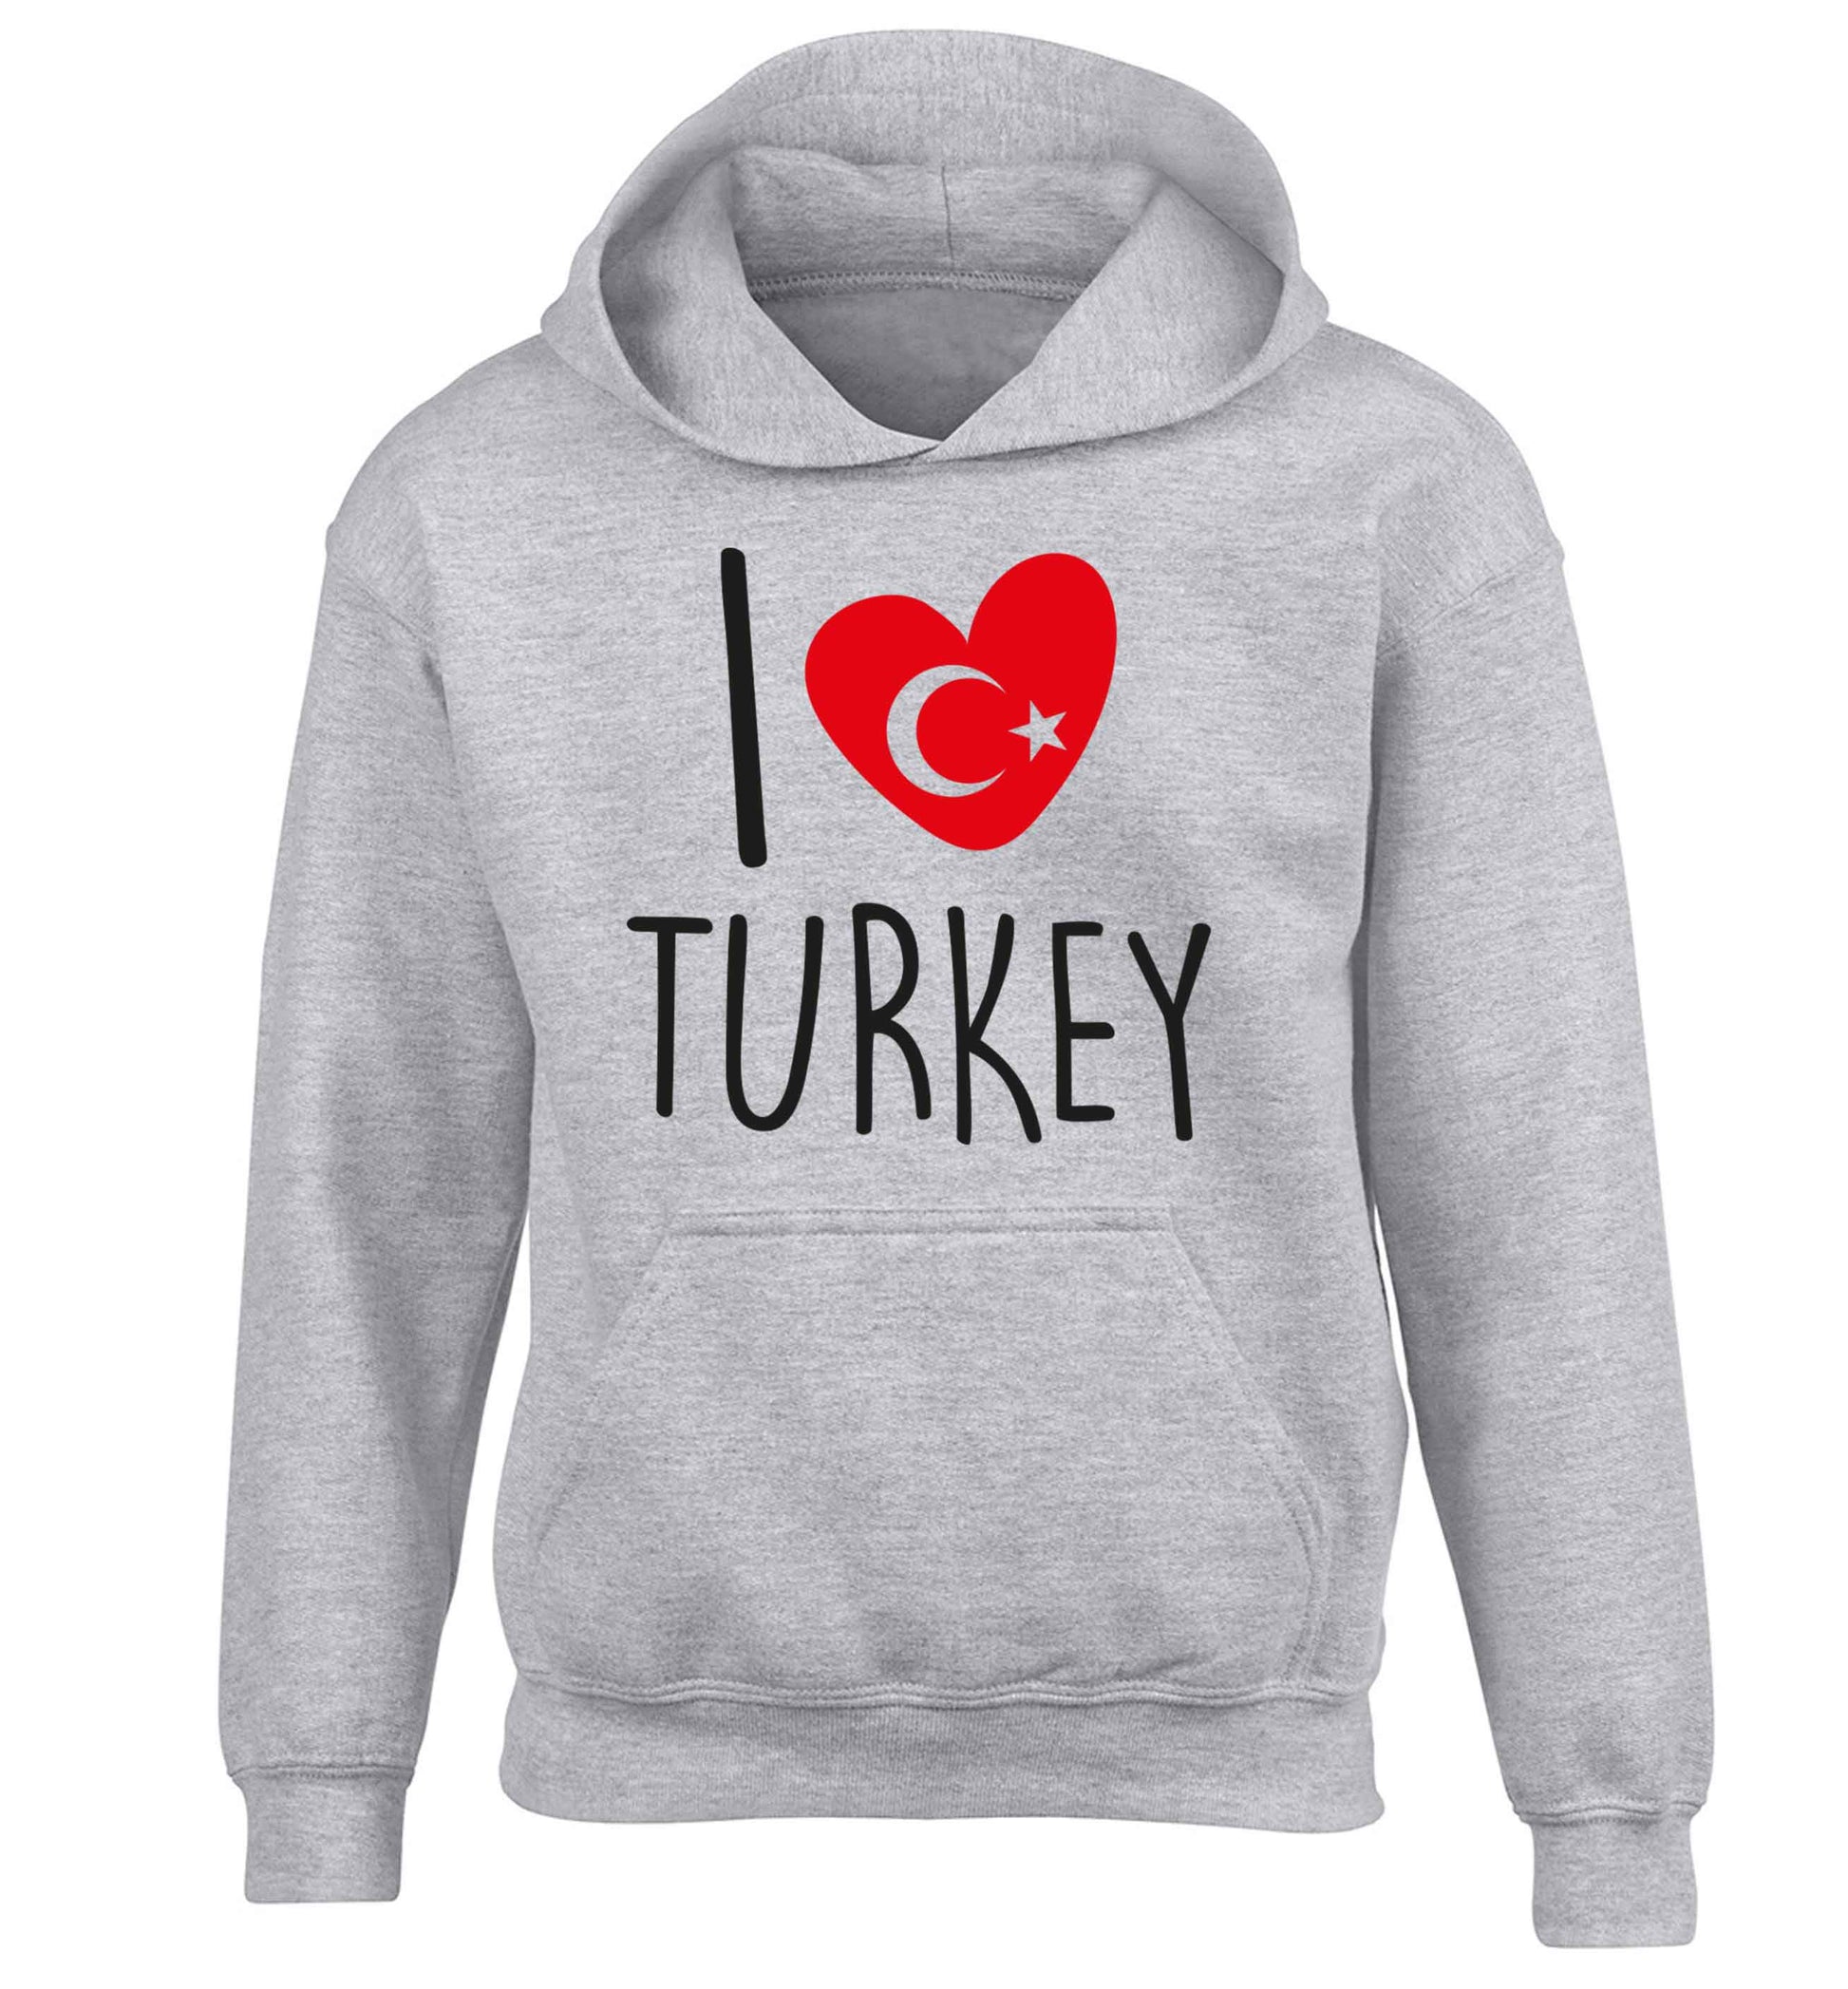 I love Turkey children's grey hoodie 12-13 Years